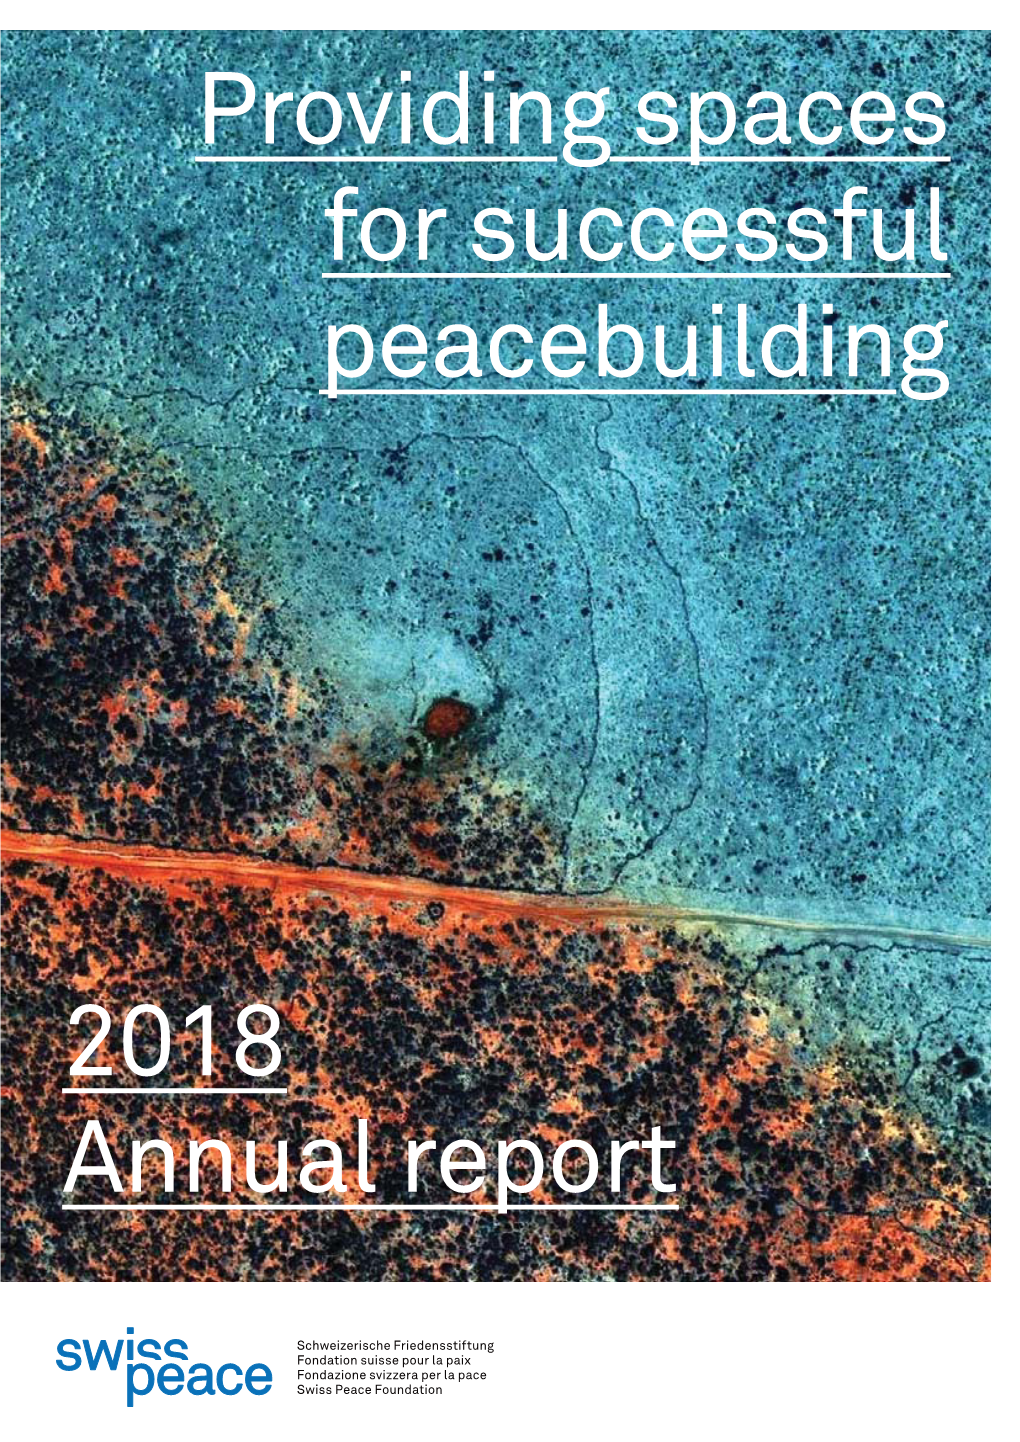 2018 Annual Report Providing Spaces for Successful Peacebuilding